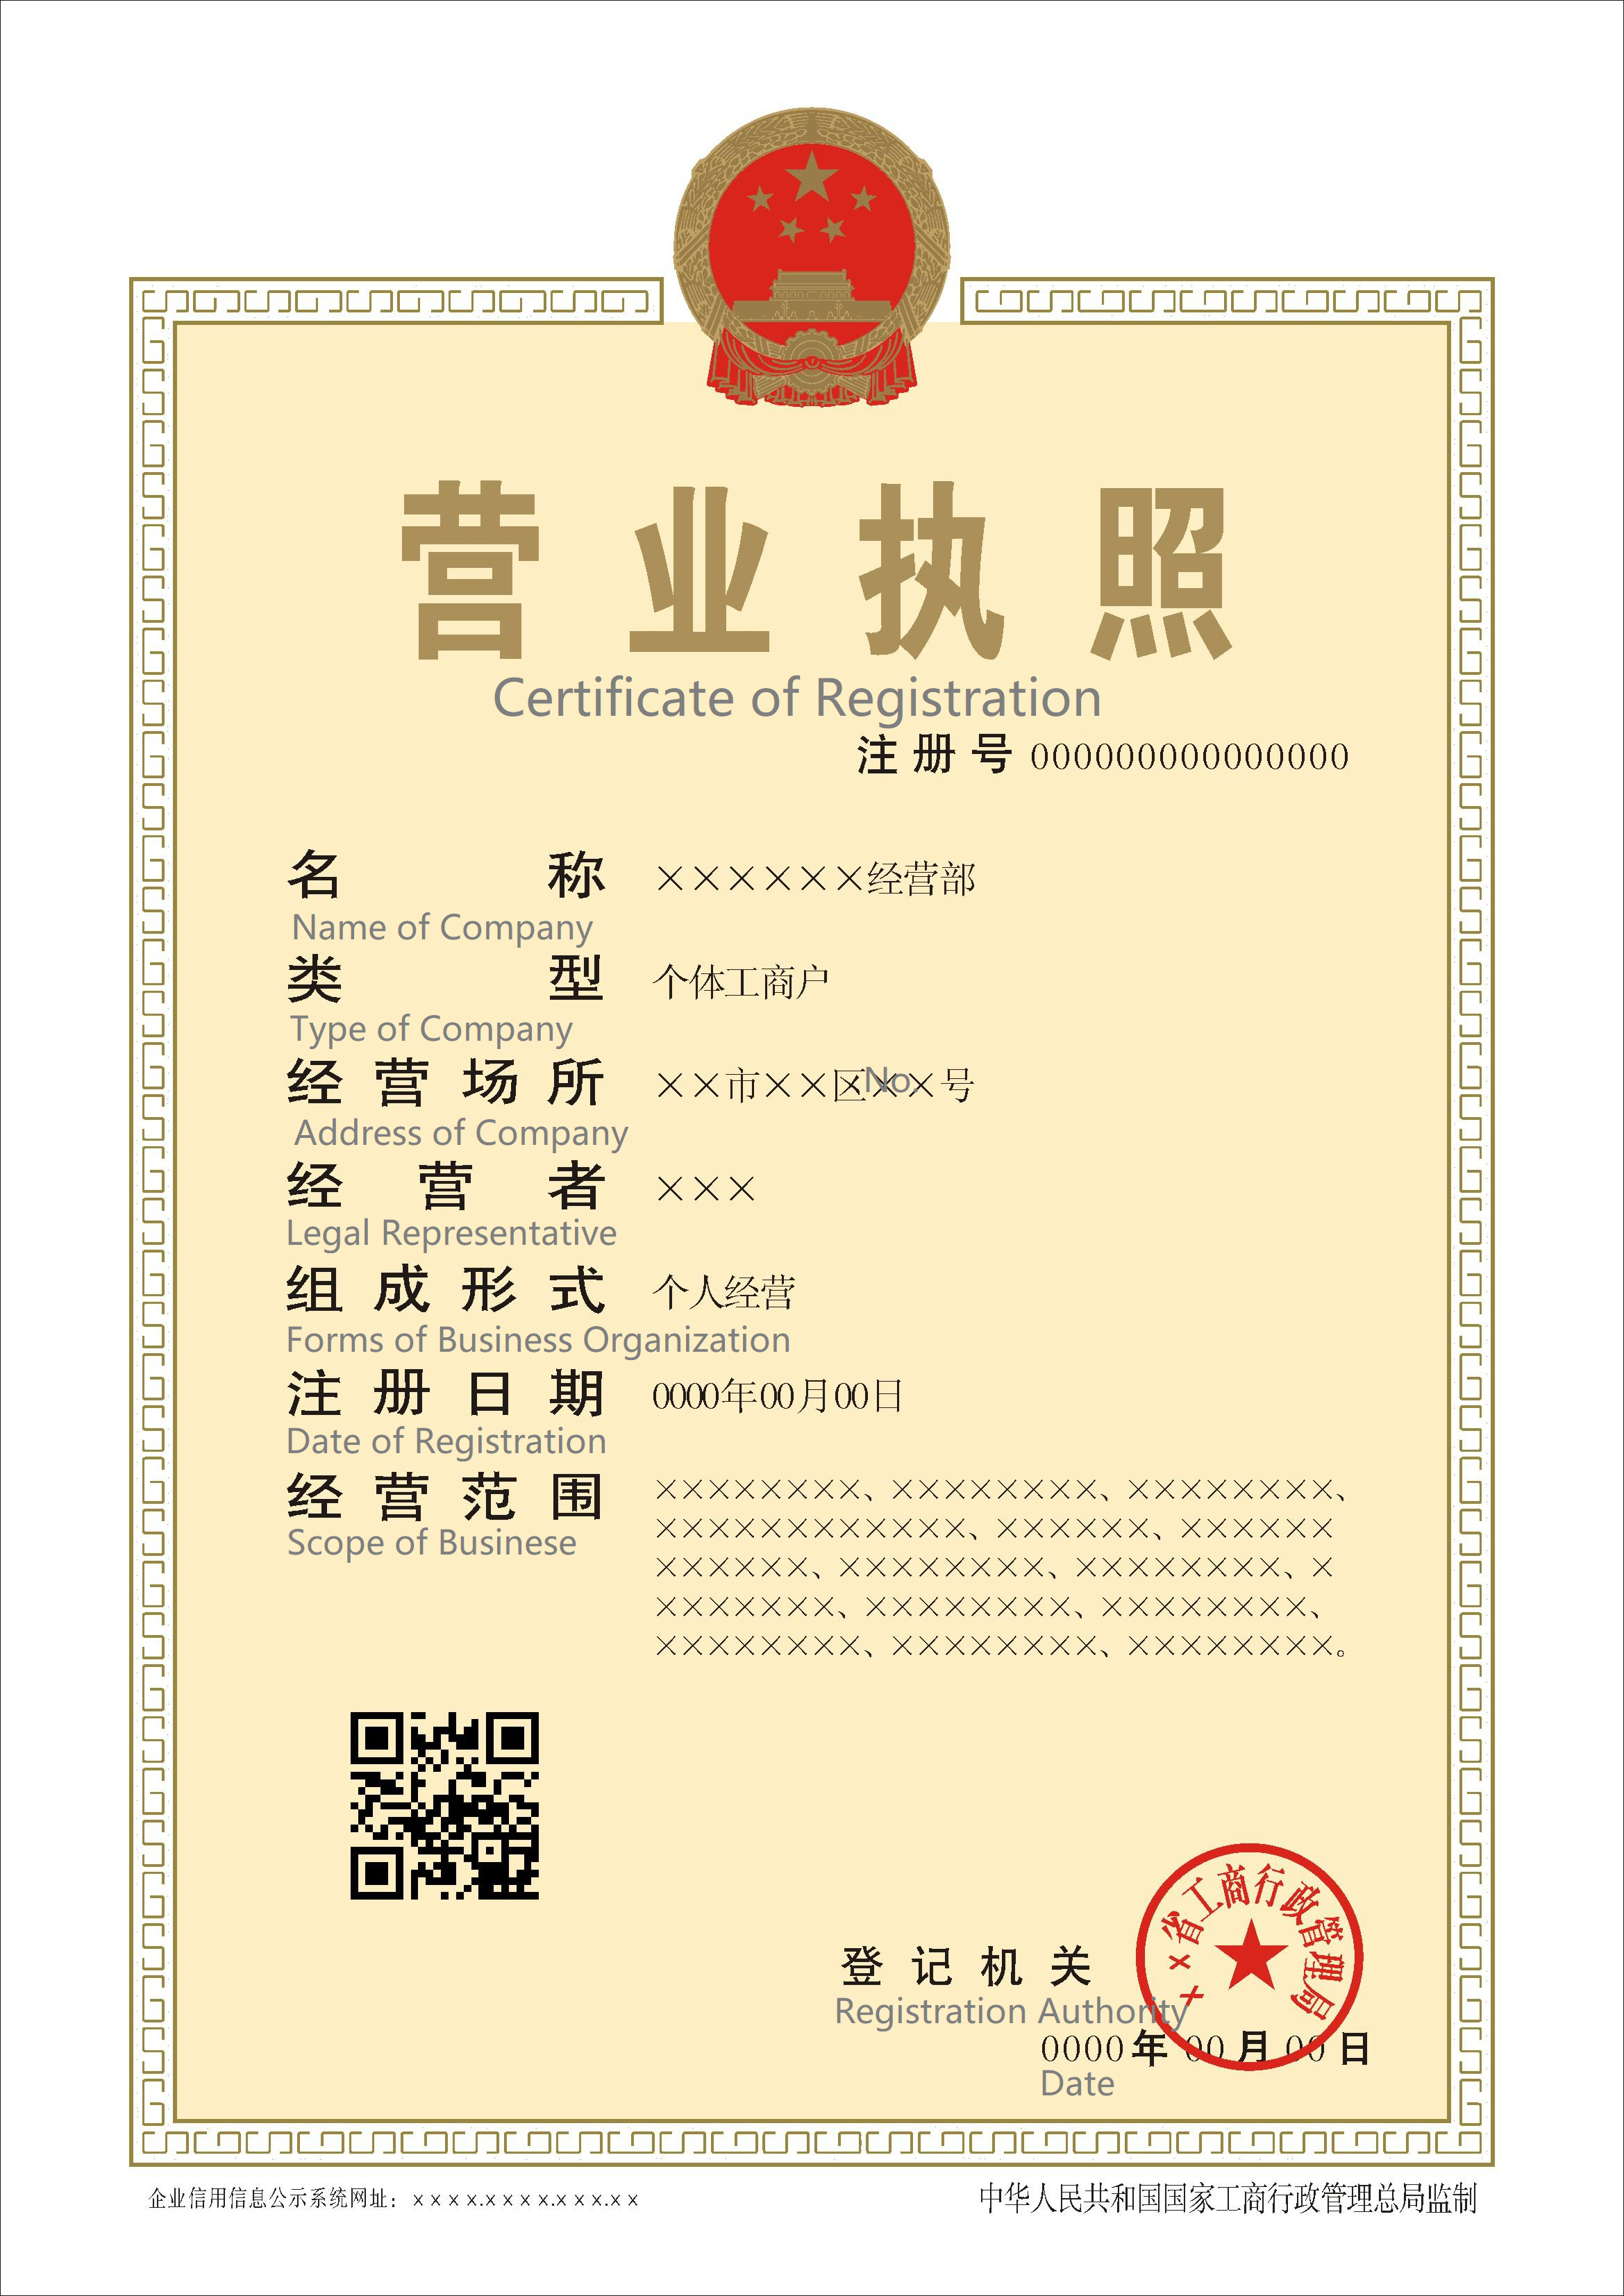 Regist_certificate_EN_CN.png